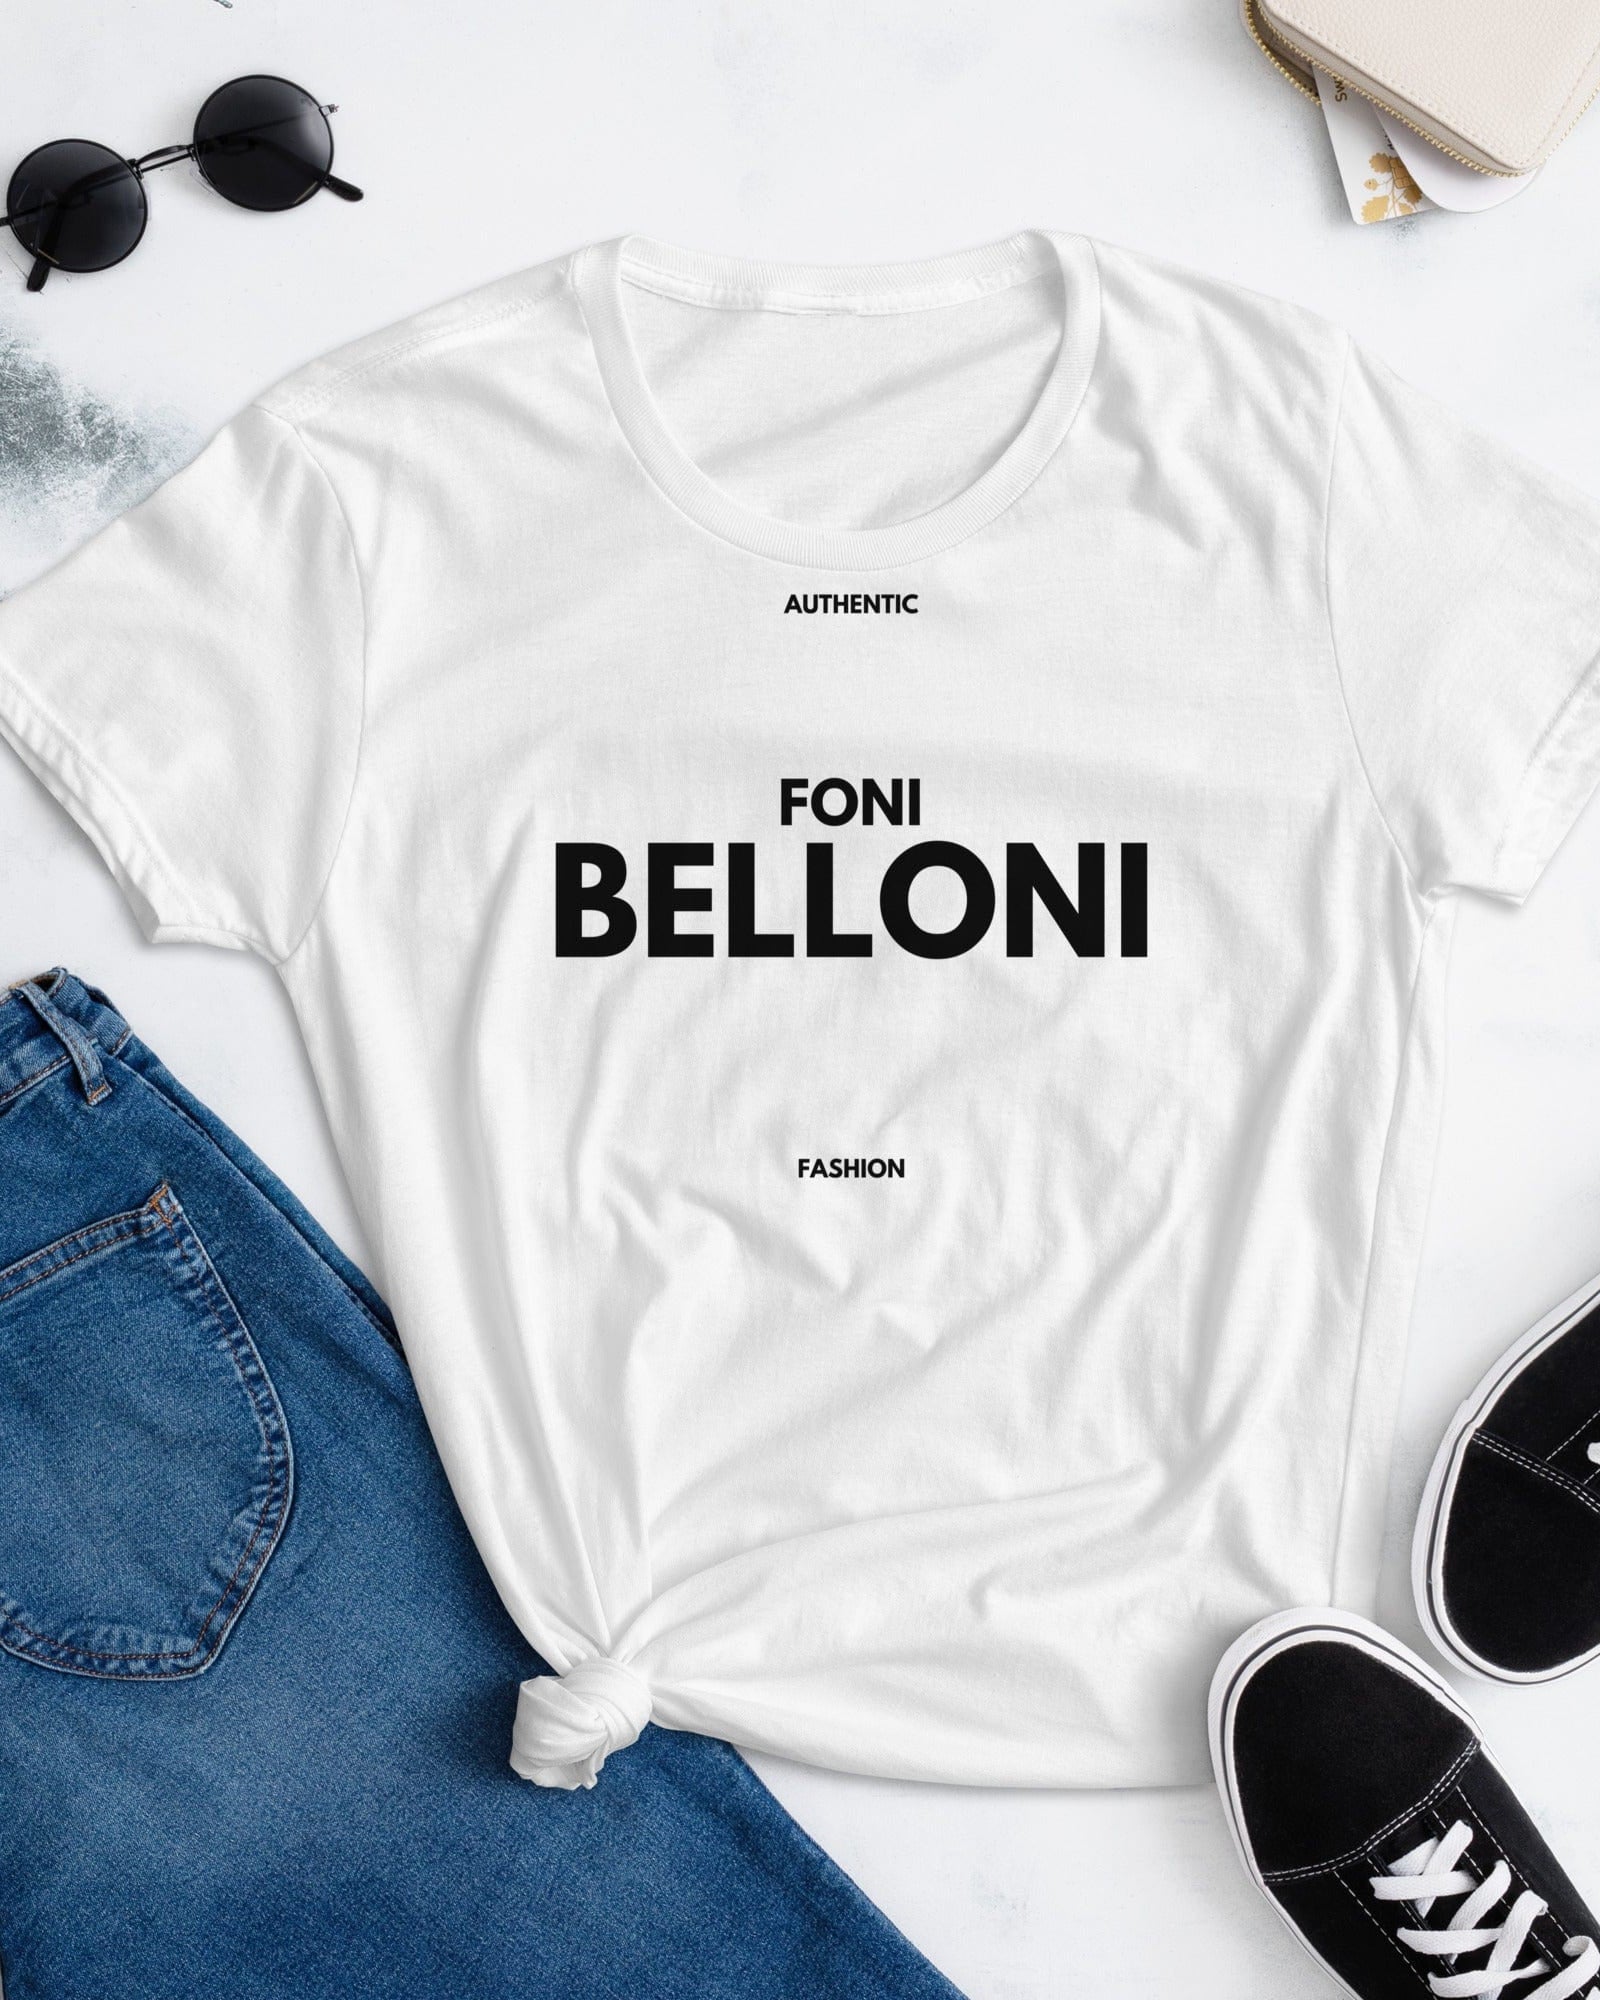 Foni Belloni Authentic Fashion Women's T-shirt White / S Women's Shirts Jolly & Goode